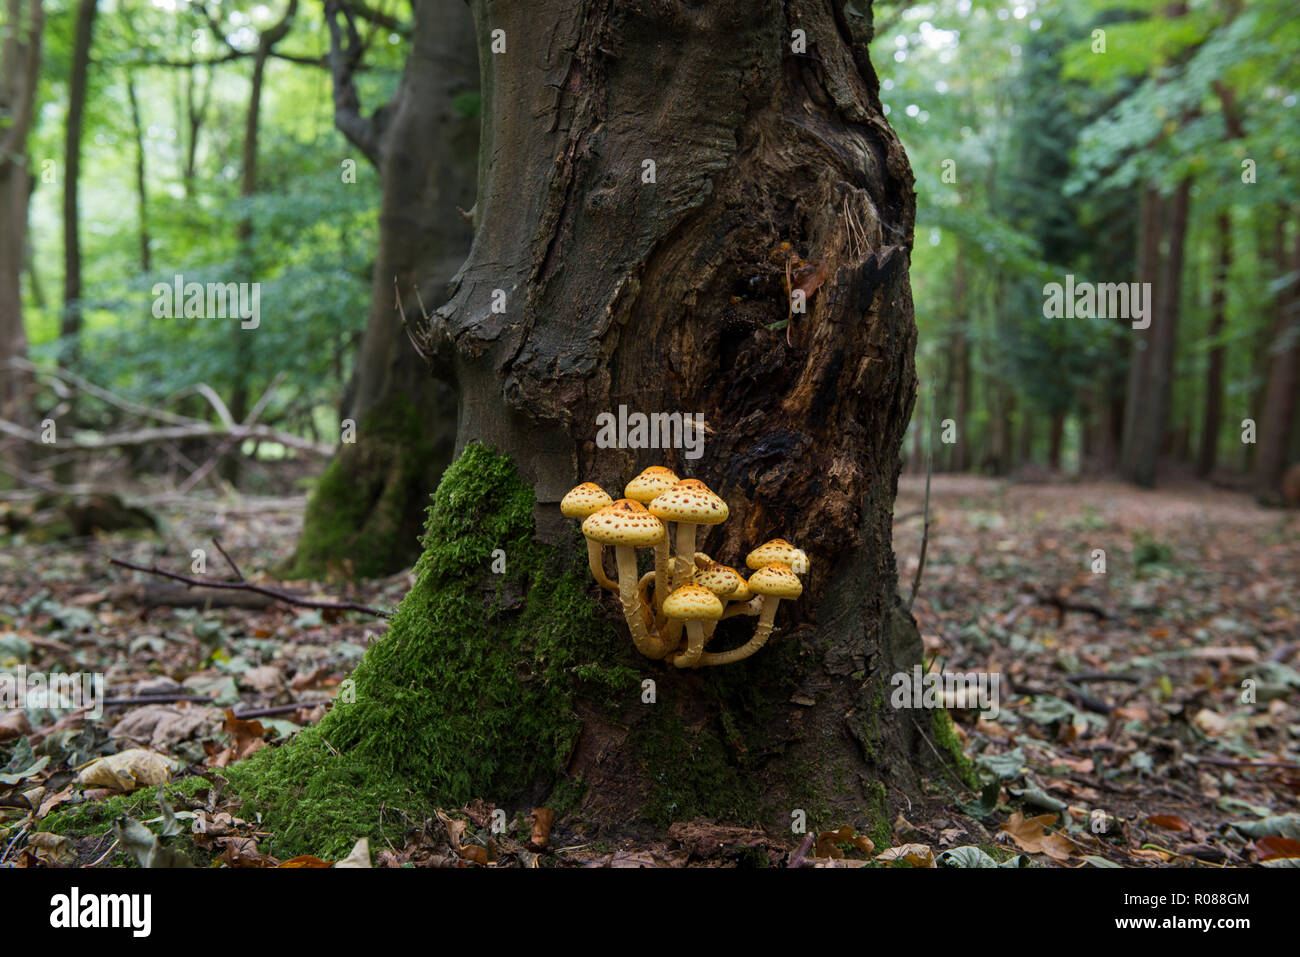 Golden Scalycap Fungus - Pholiota aurivella is an inedible mushroom that grows on mature Beech Trees. Image taken in Ashridge Woods, Hertfordshire, UK Stock Photo